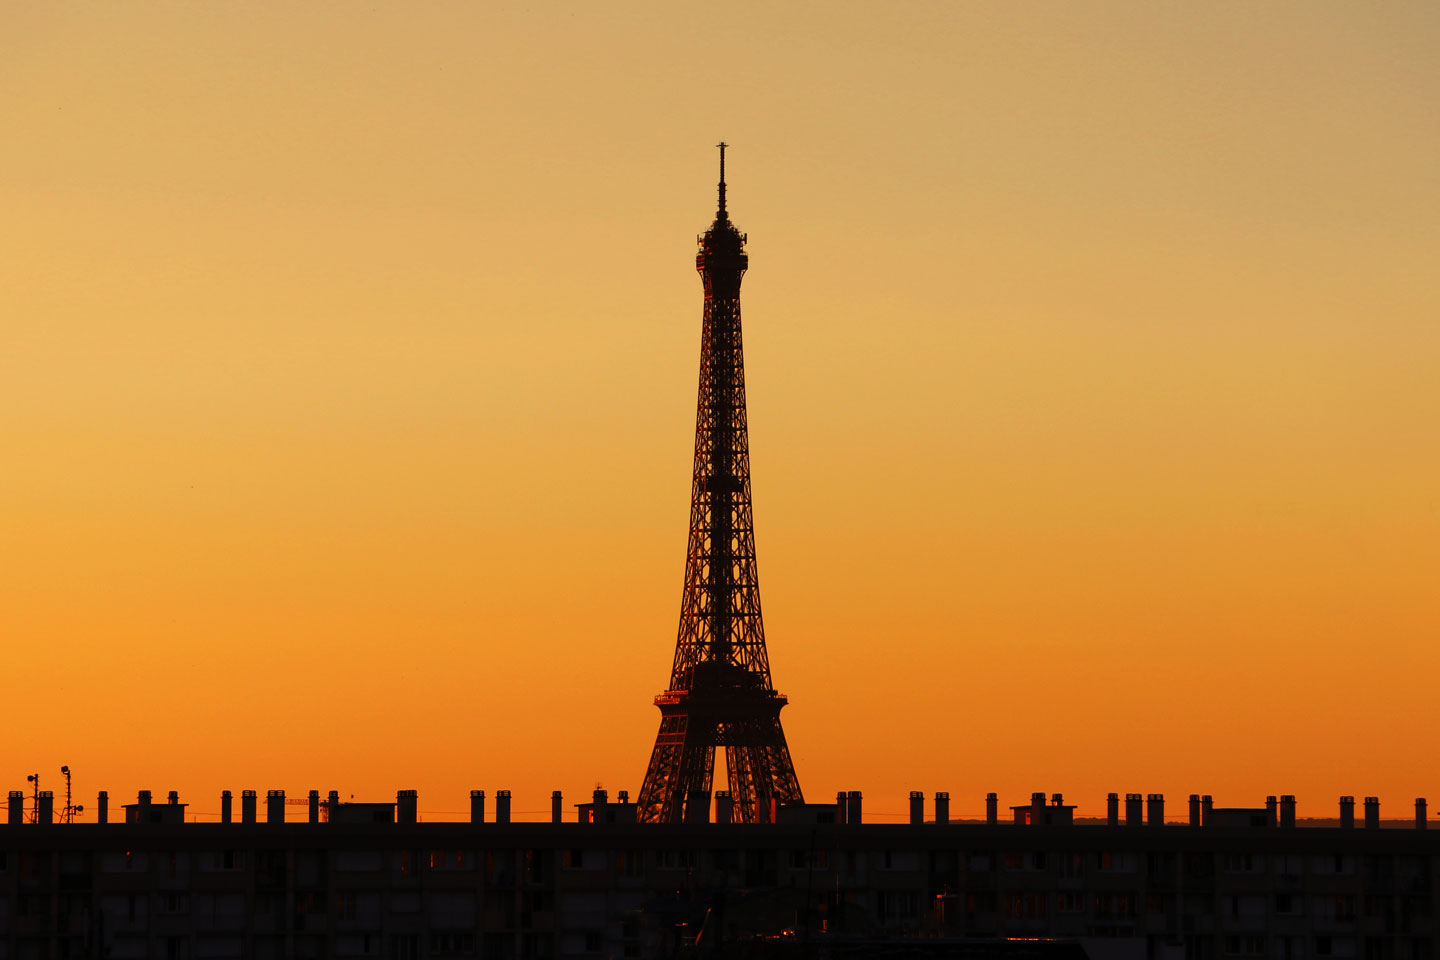 French Photographer Paris France Landscape Photography Orange Sunset at Eiffel Tower